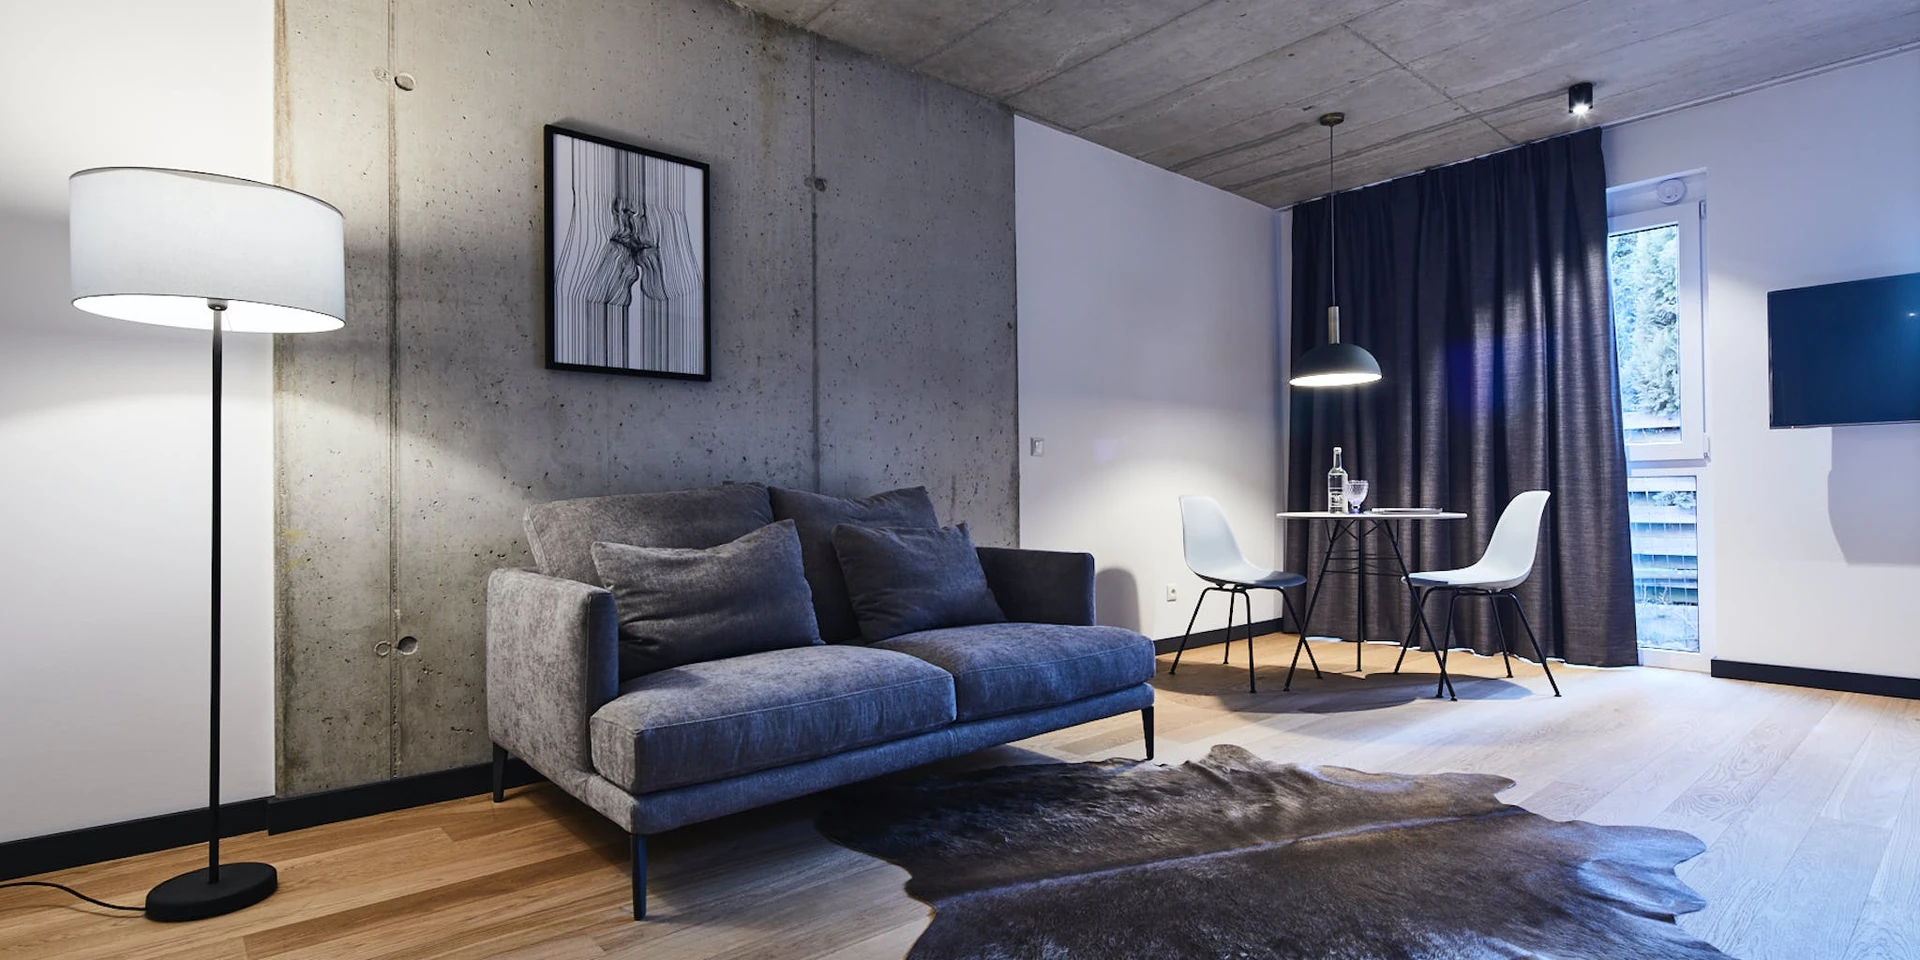 Entire fully furnished flat in Wolfsburg